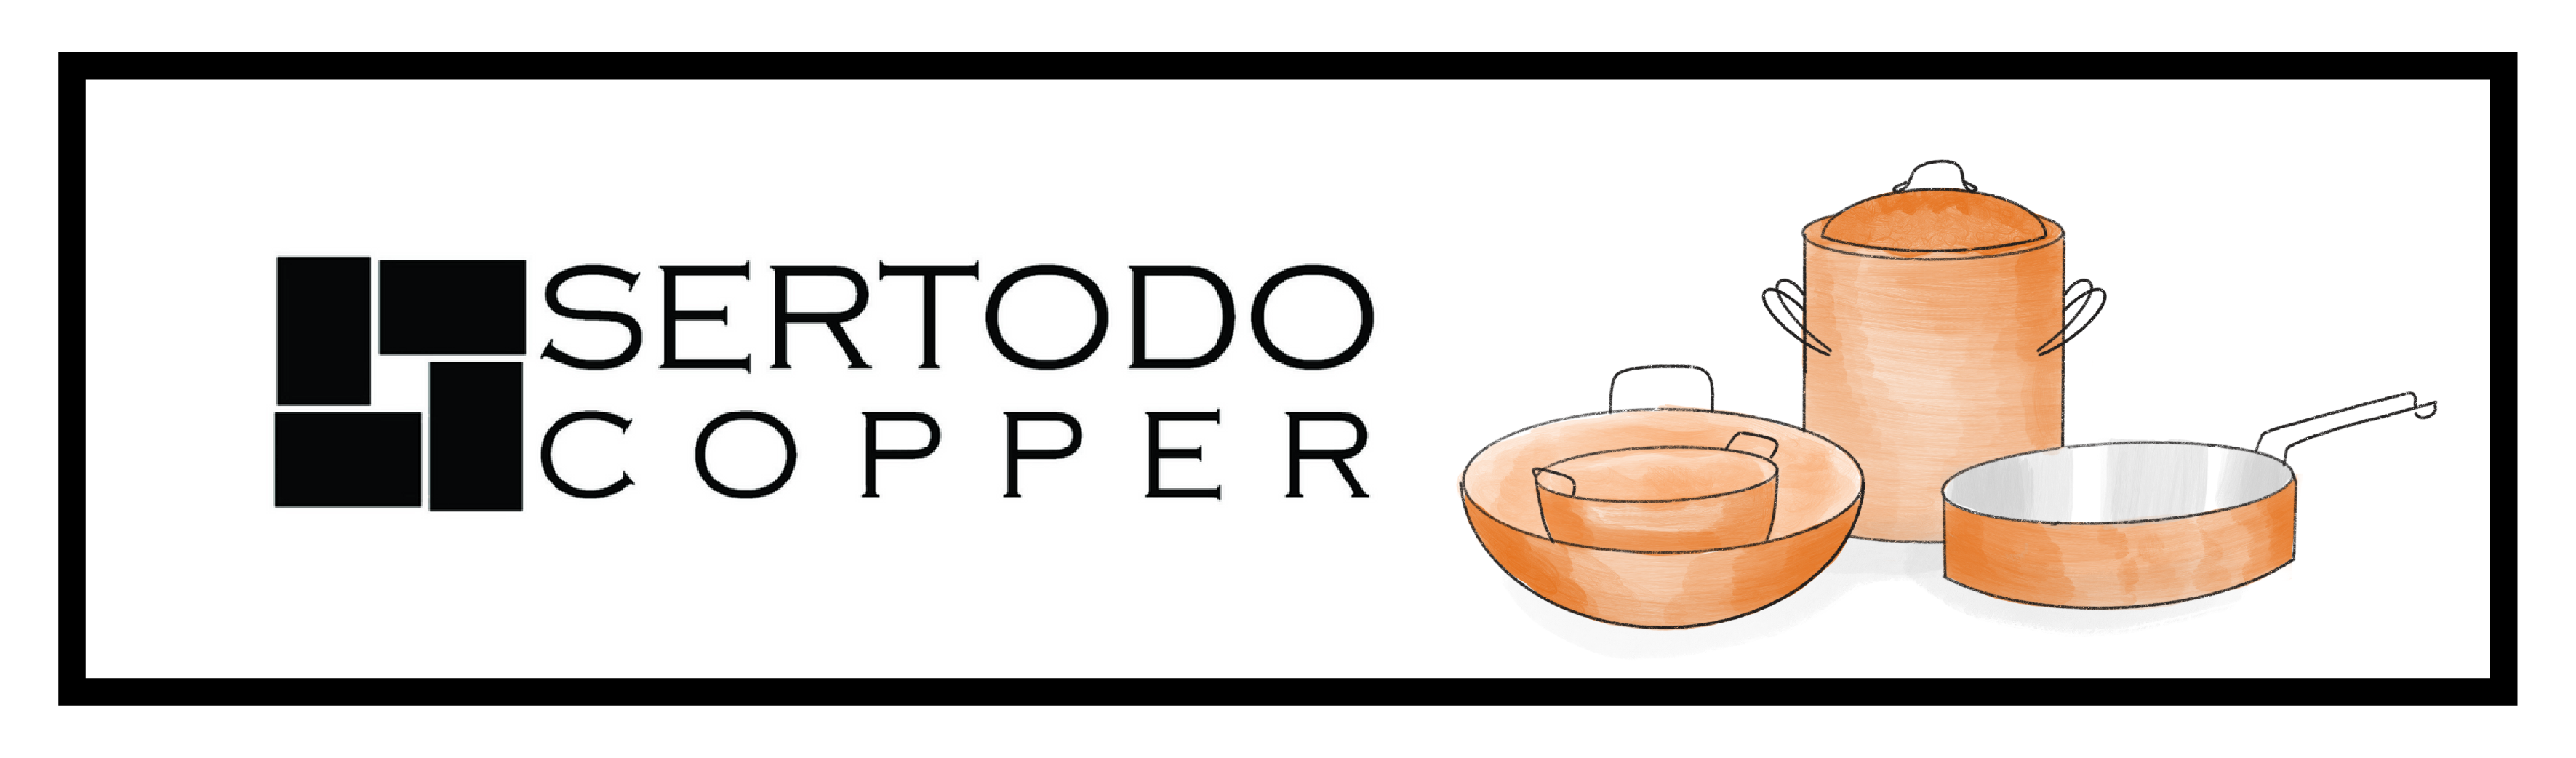 Is sertodo copper good? 